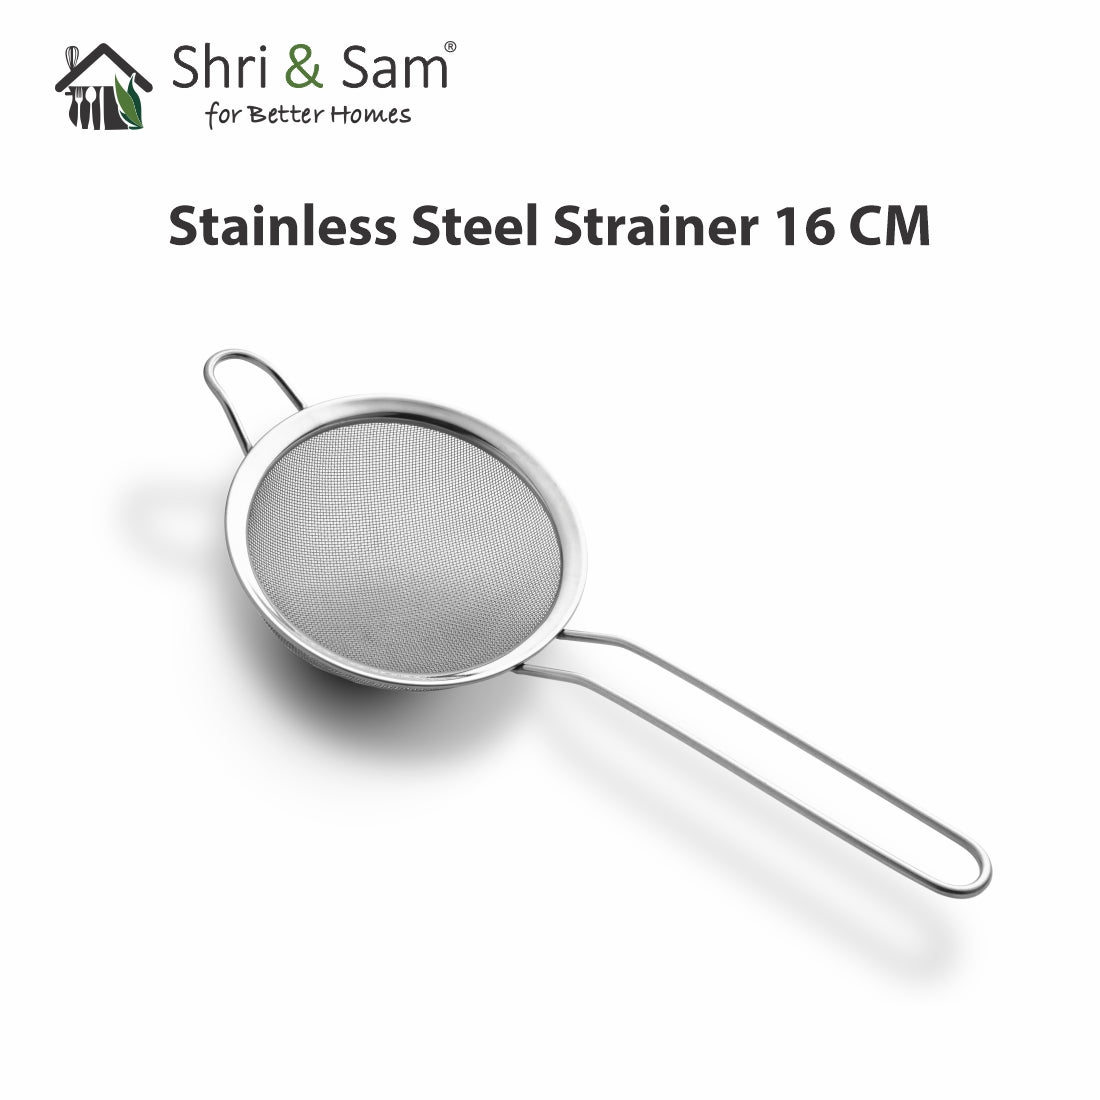 Stainless Steel Strainer 16 CM